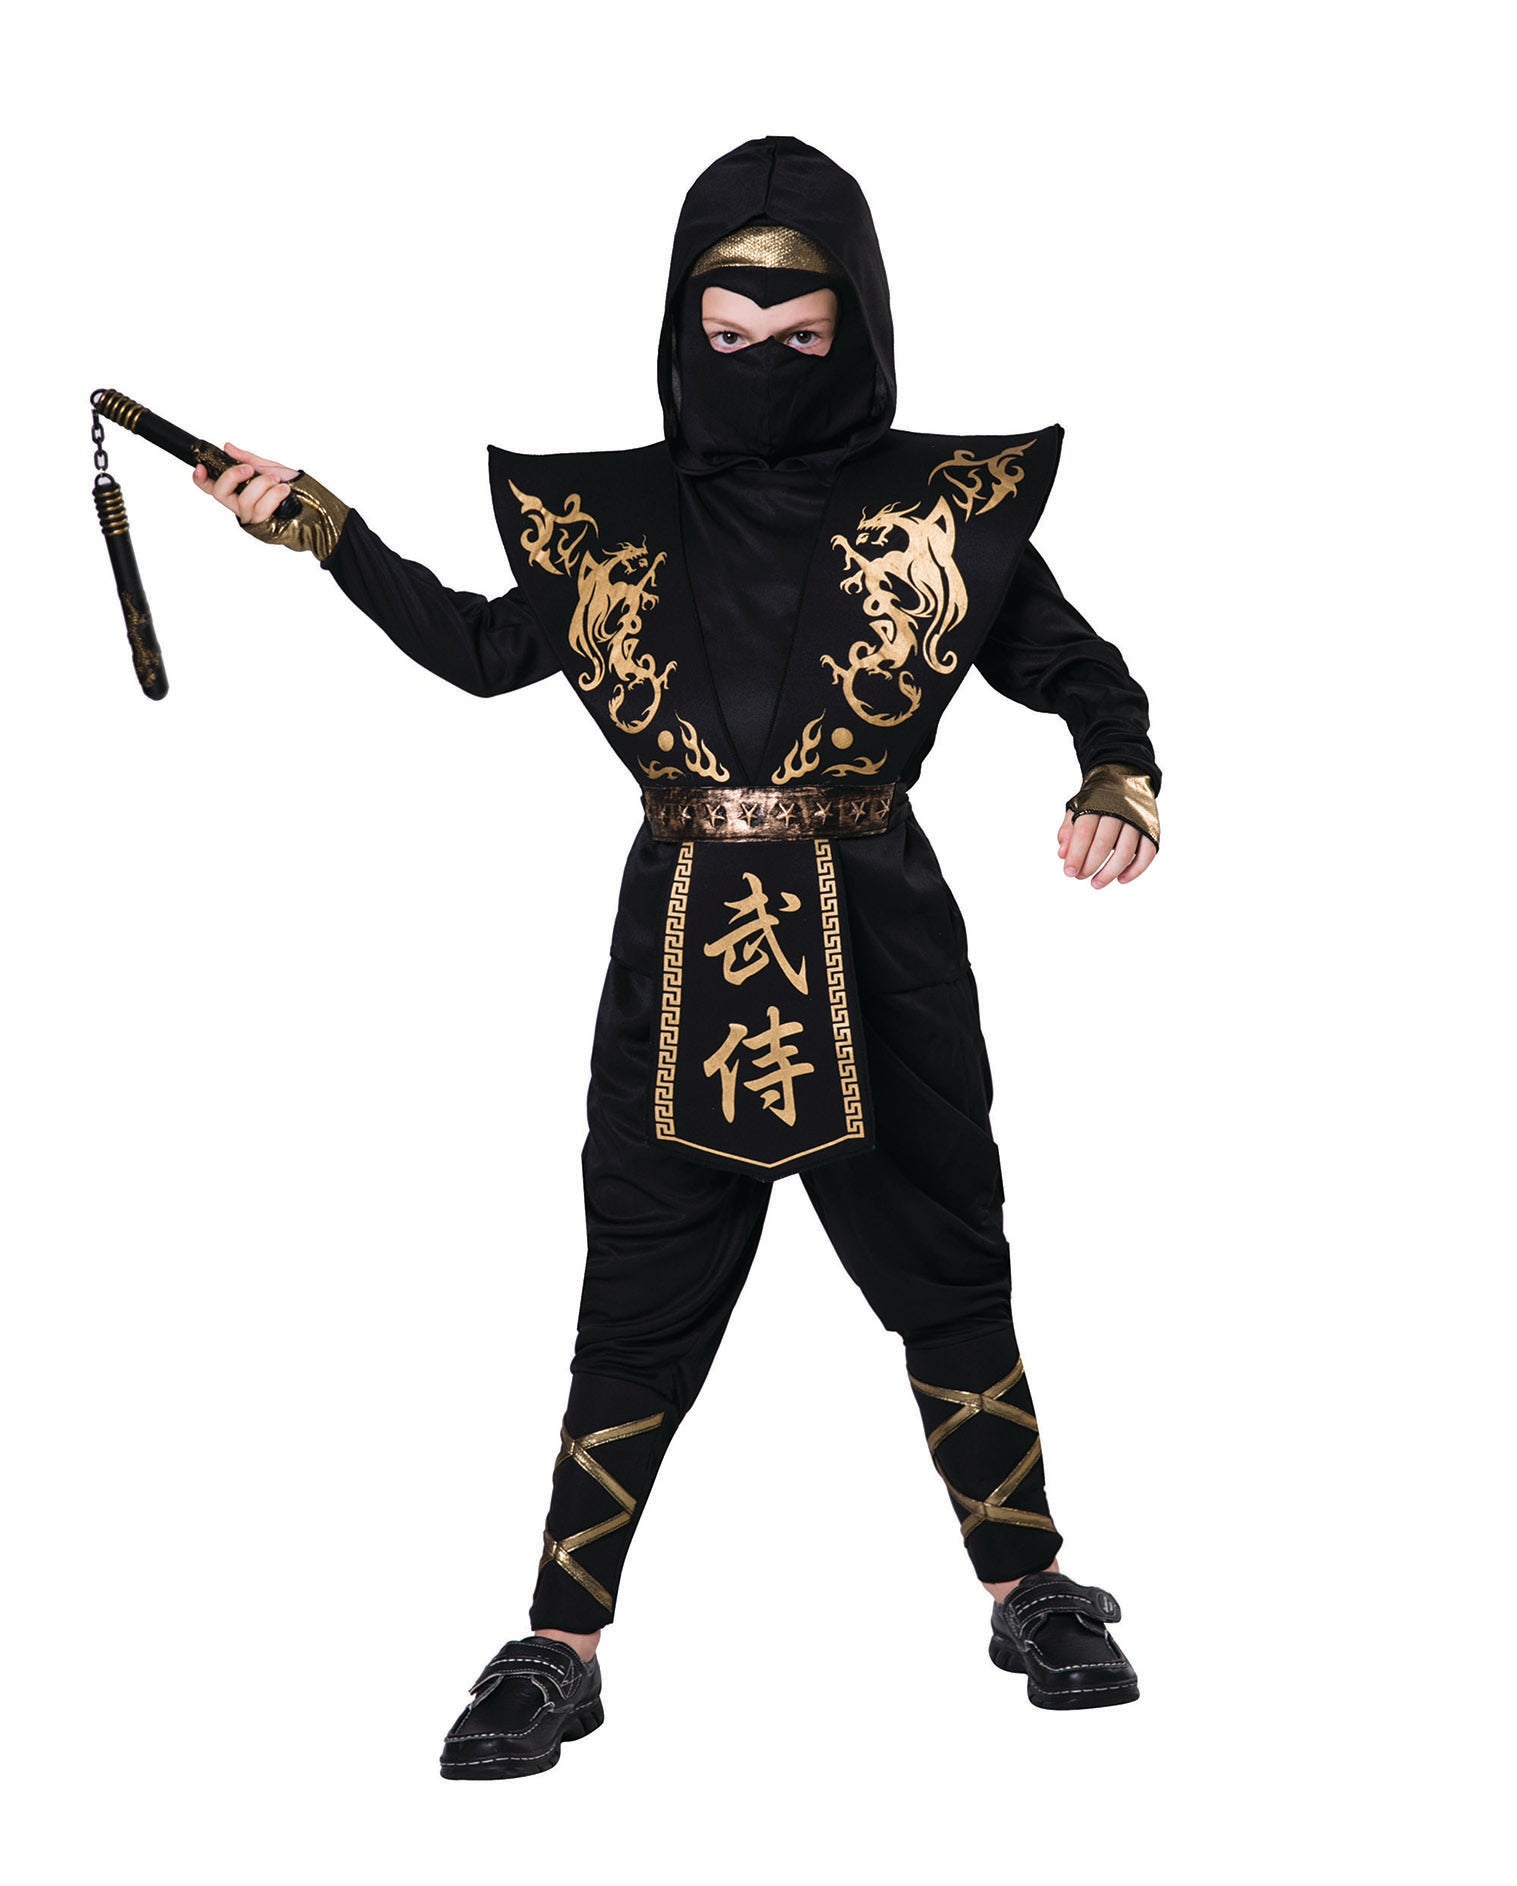 Deluxe Gold and Black Ninja Costume